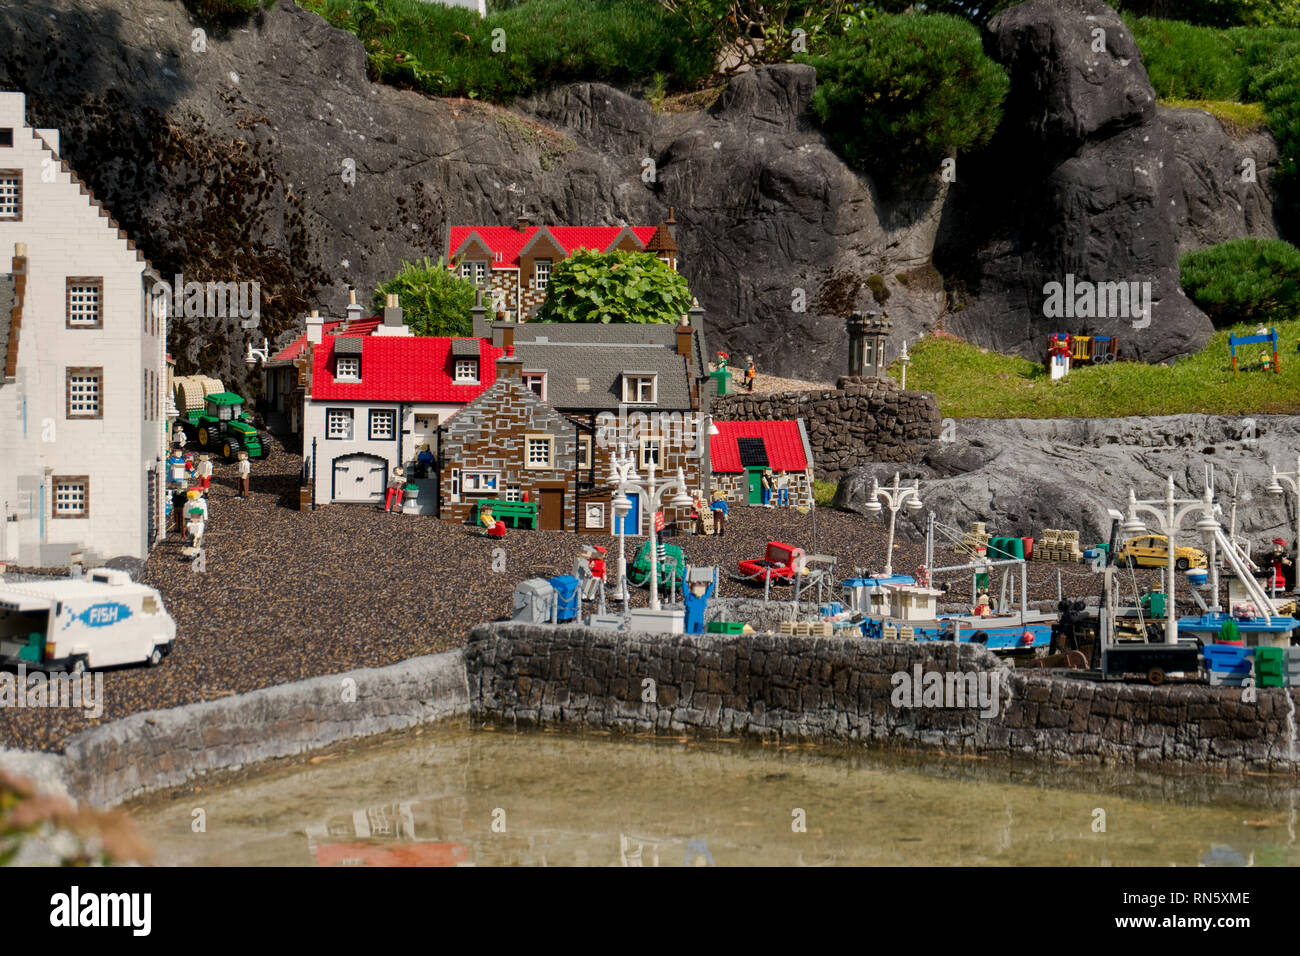 A Lego fishing village and dock at Legoland Billund resort in